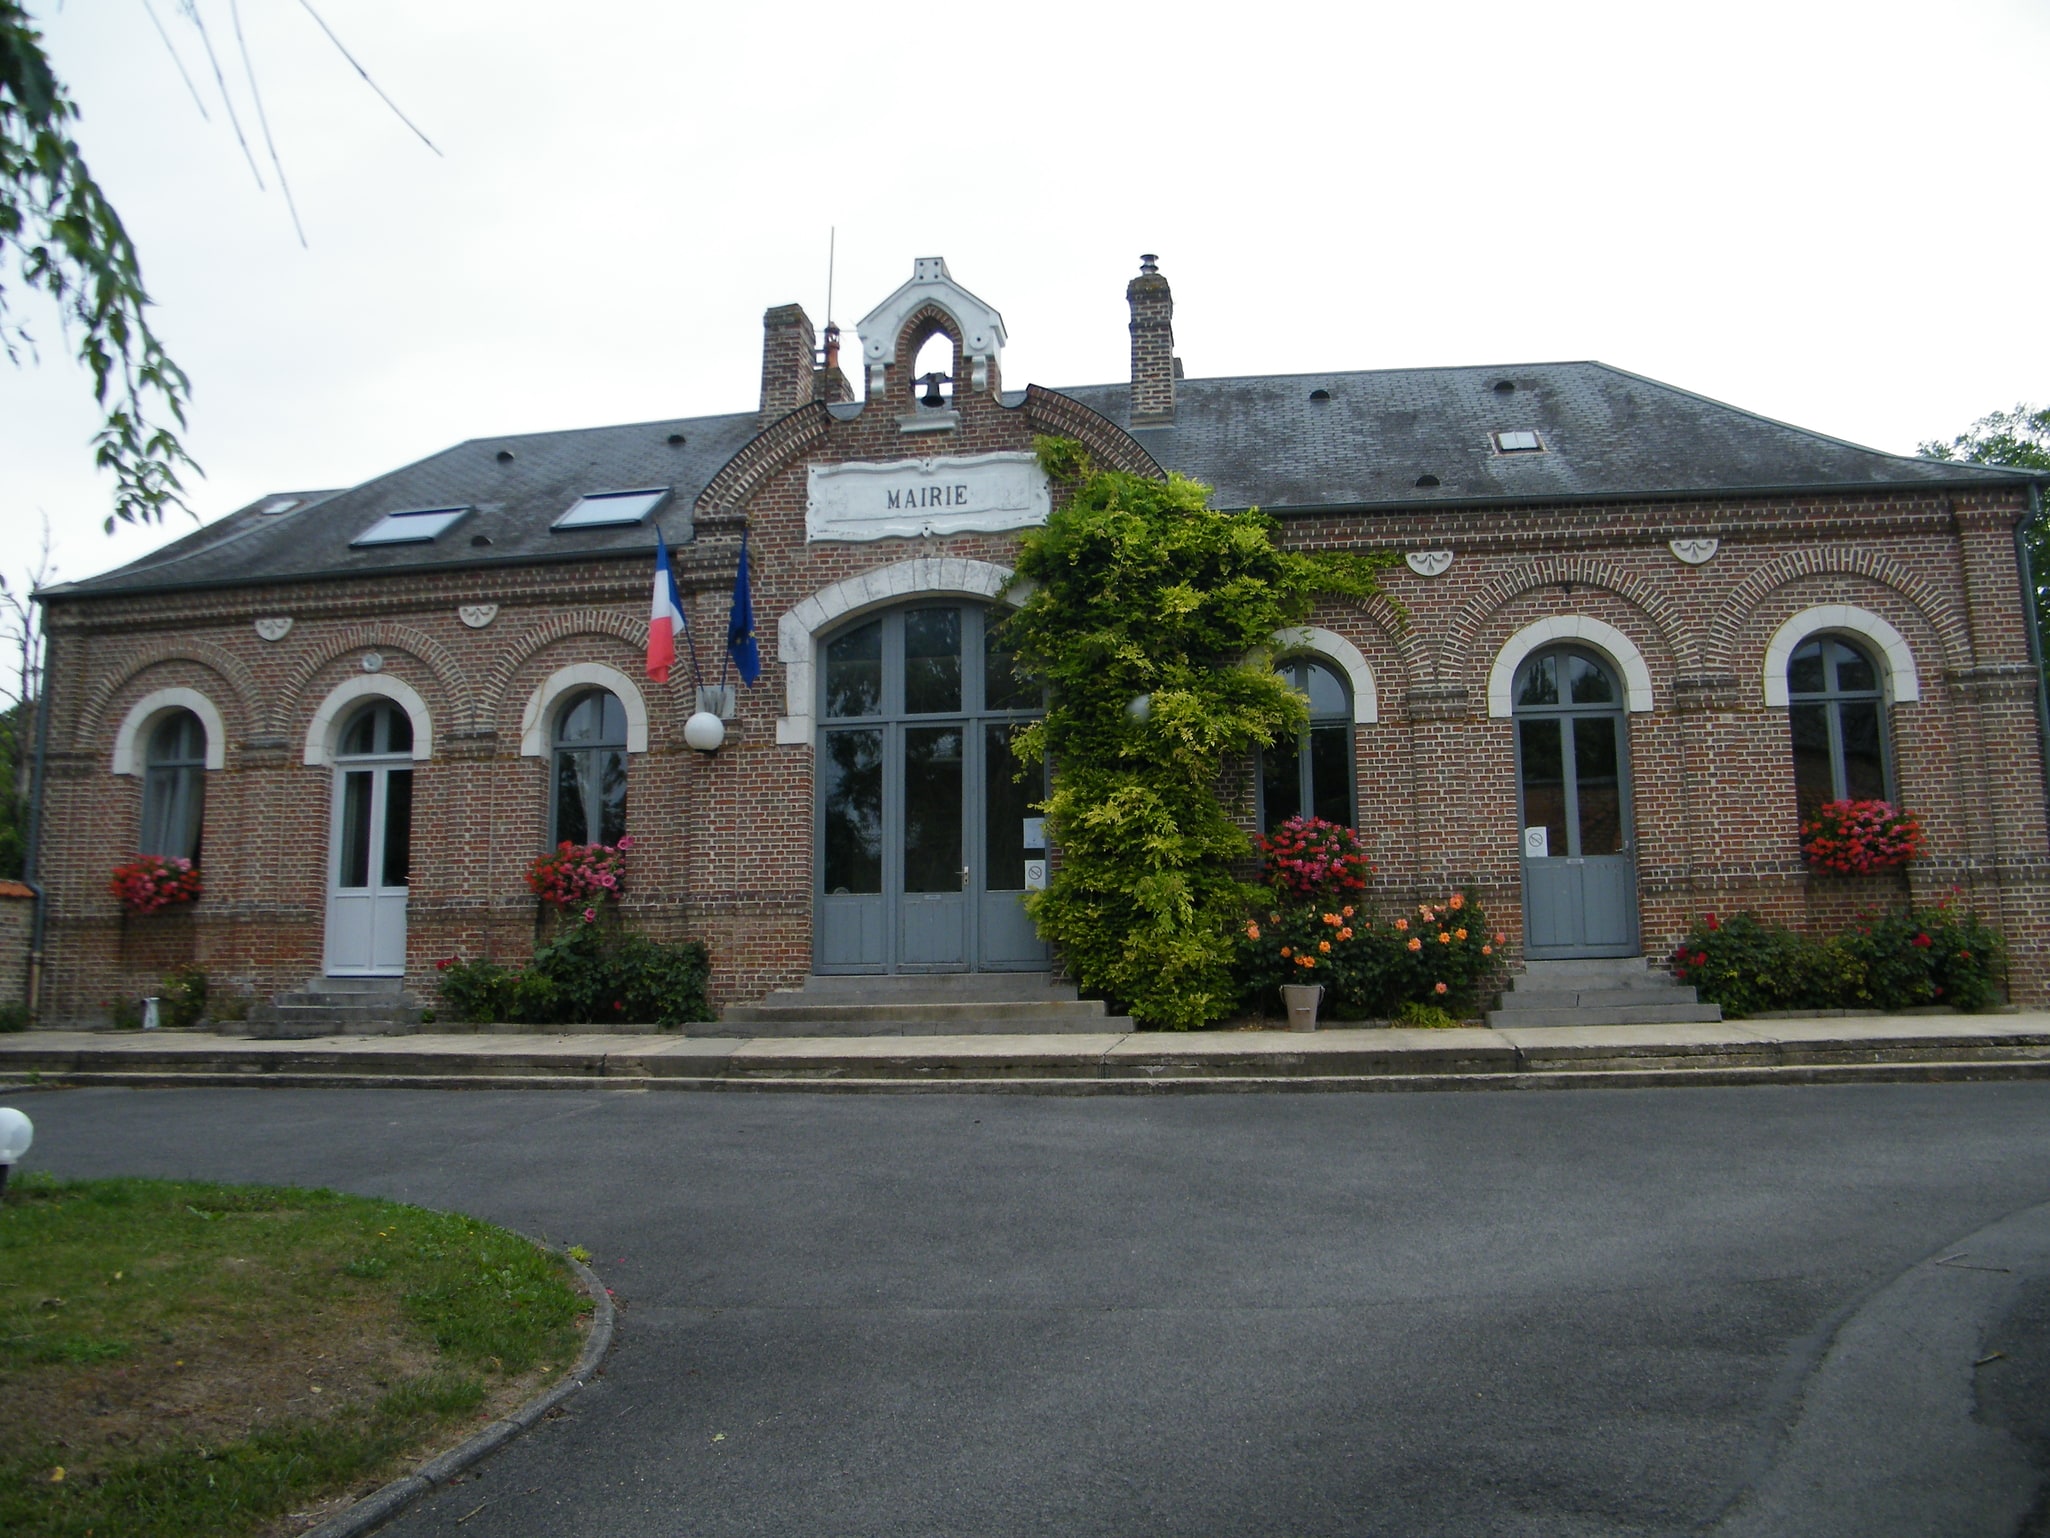 Épagne-Épagnette, France